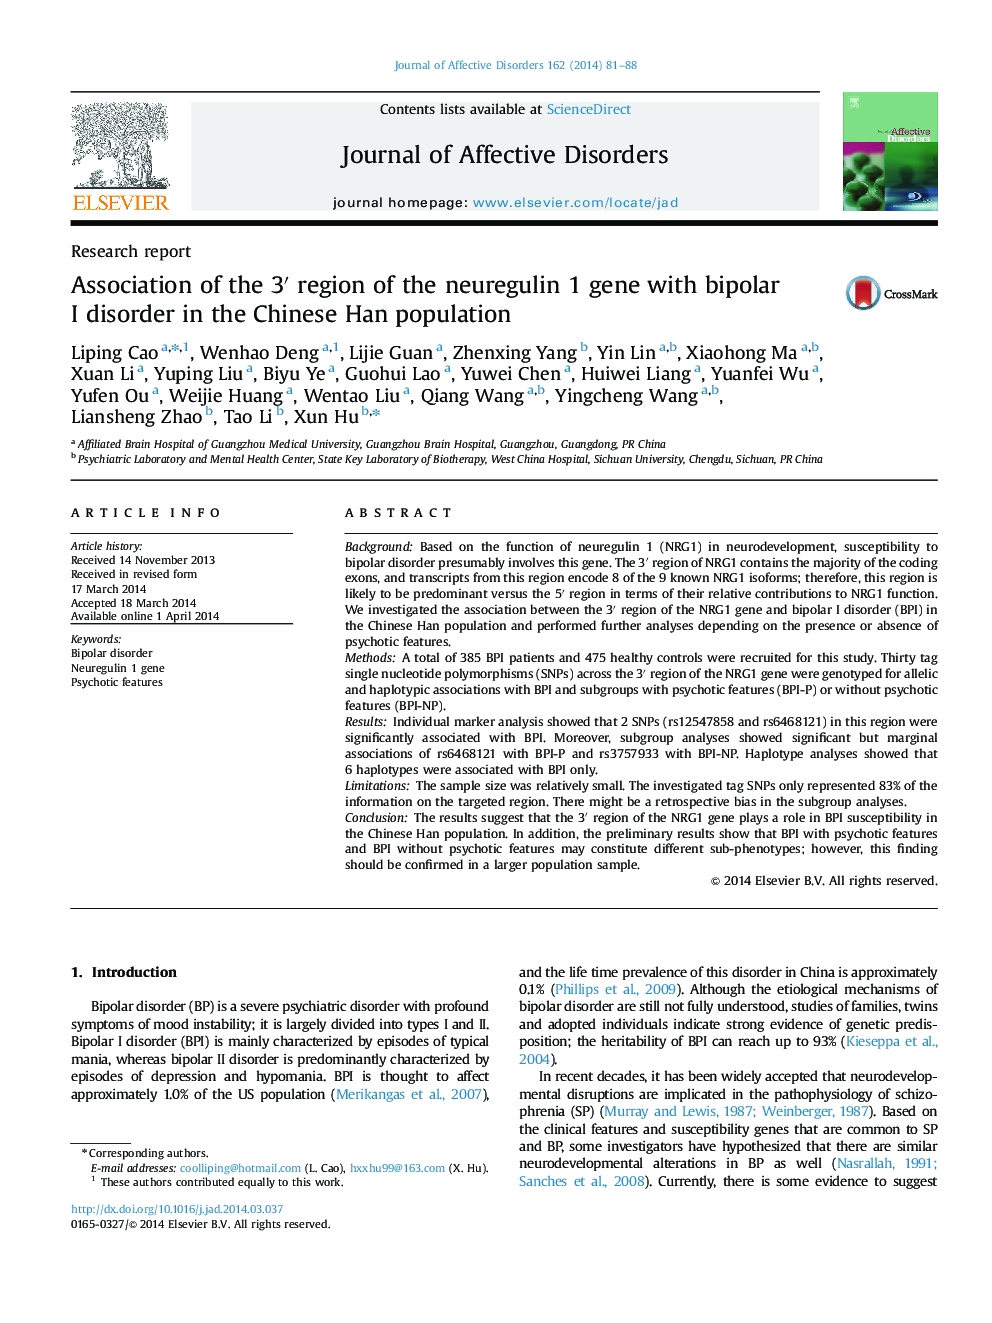 Association of the 3â² region of the neuregulin 1 gene with bipolar I disorder in the Chinese Han population